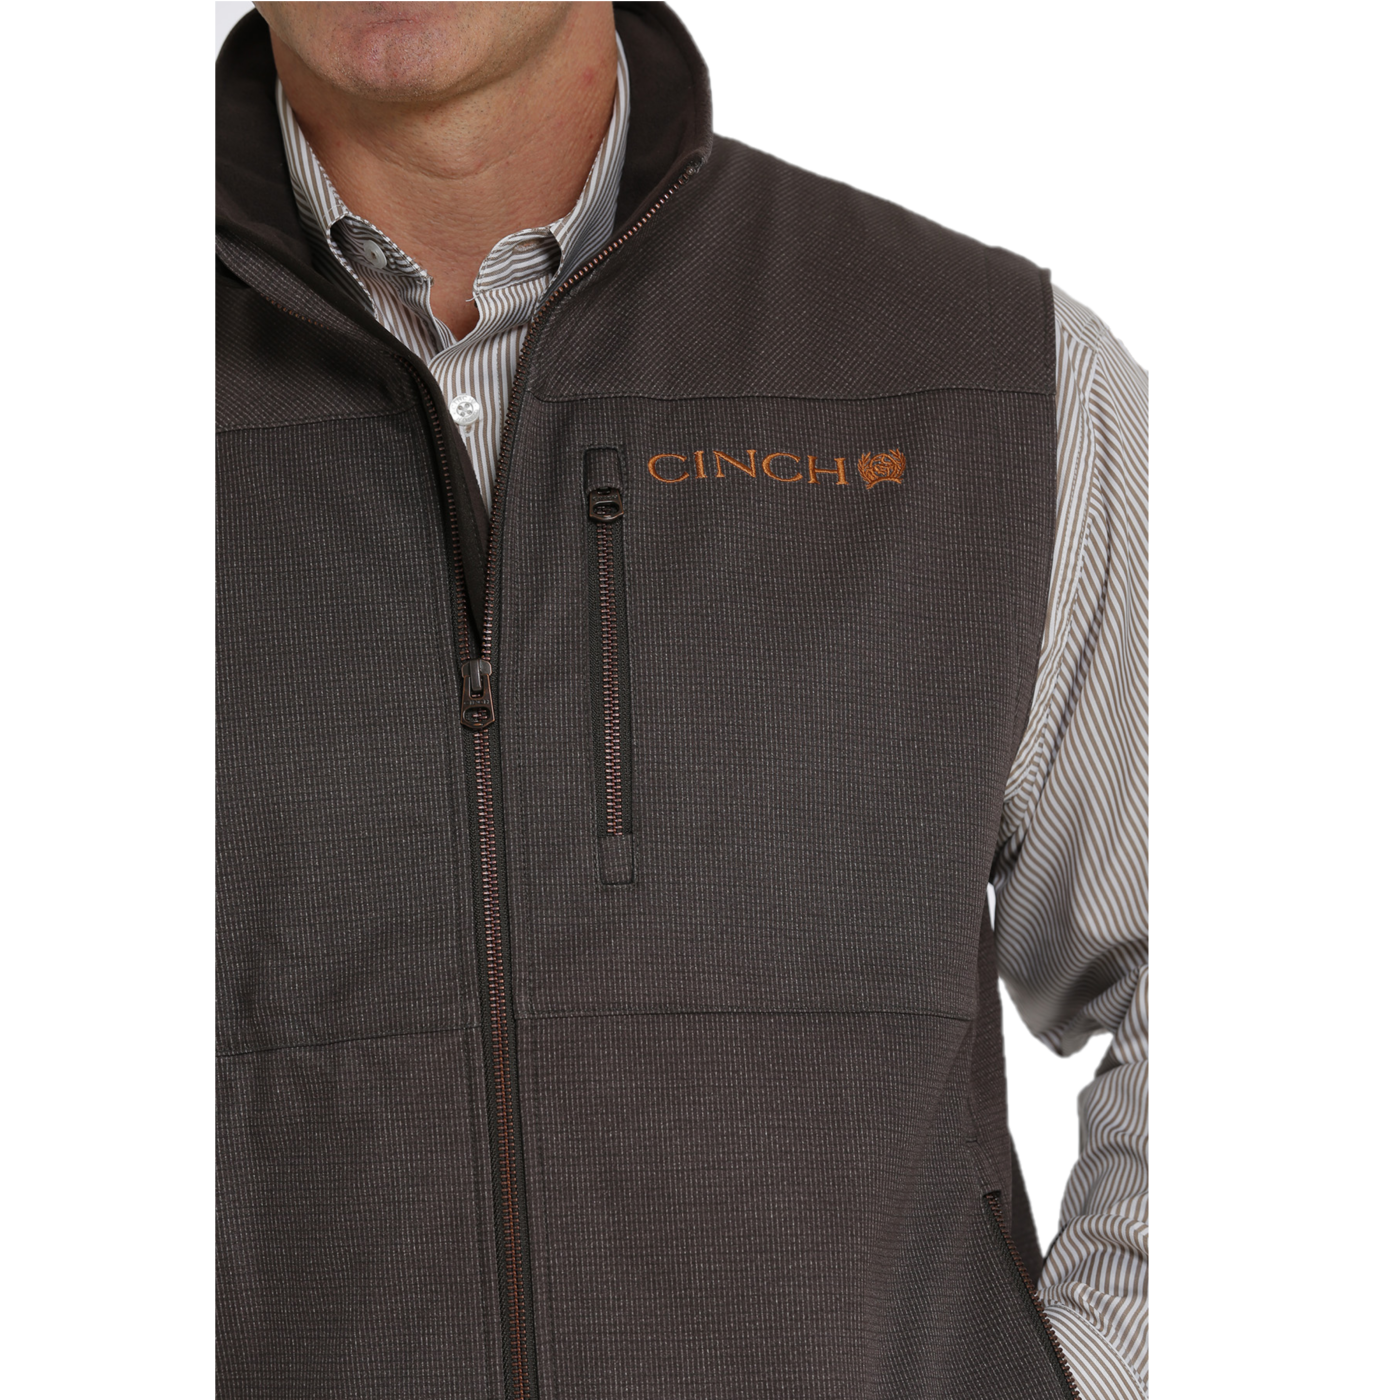 Cinch® Men's Brown Logo Bonded Vest MWV1515013